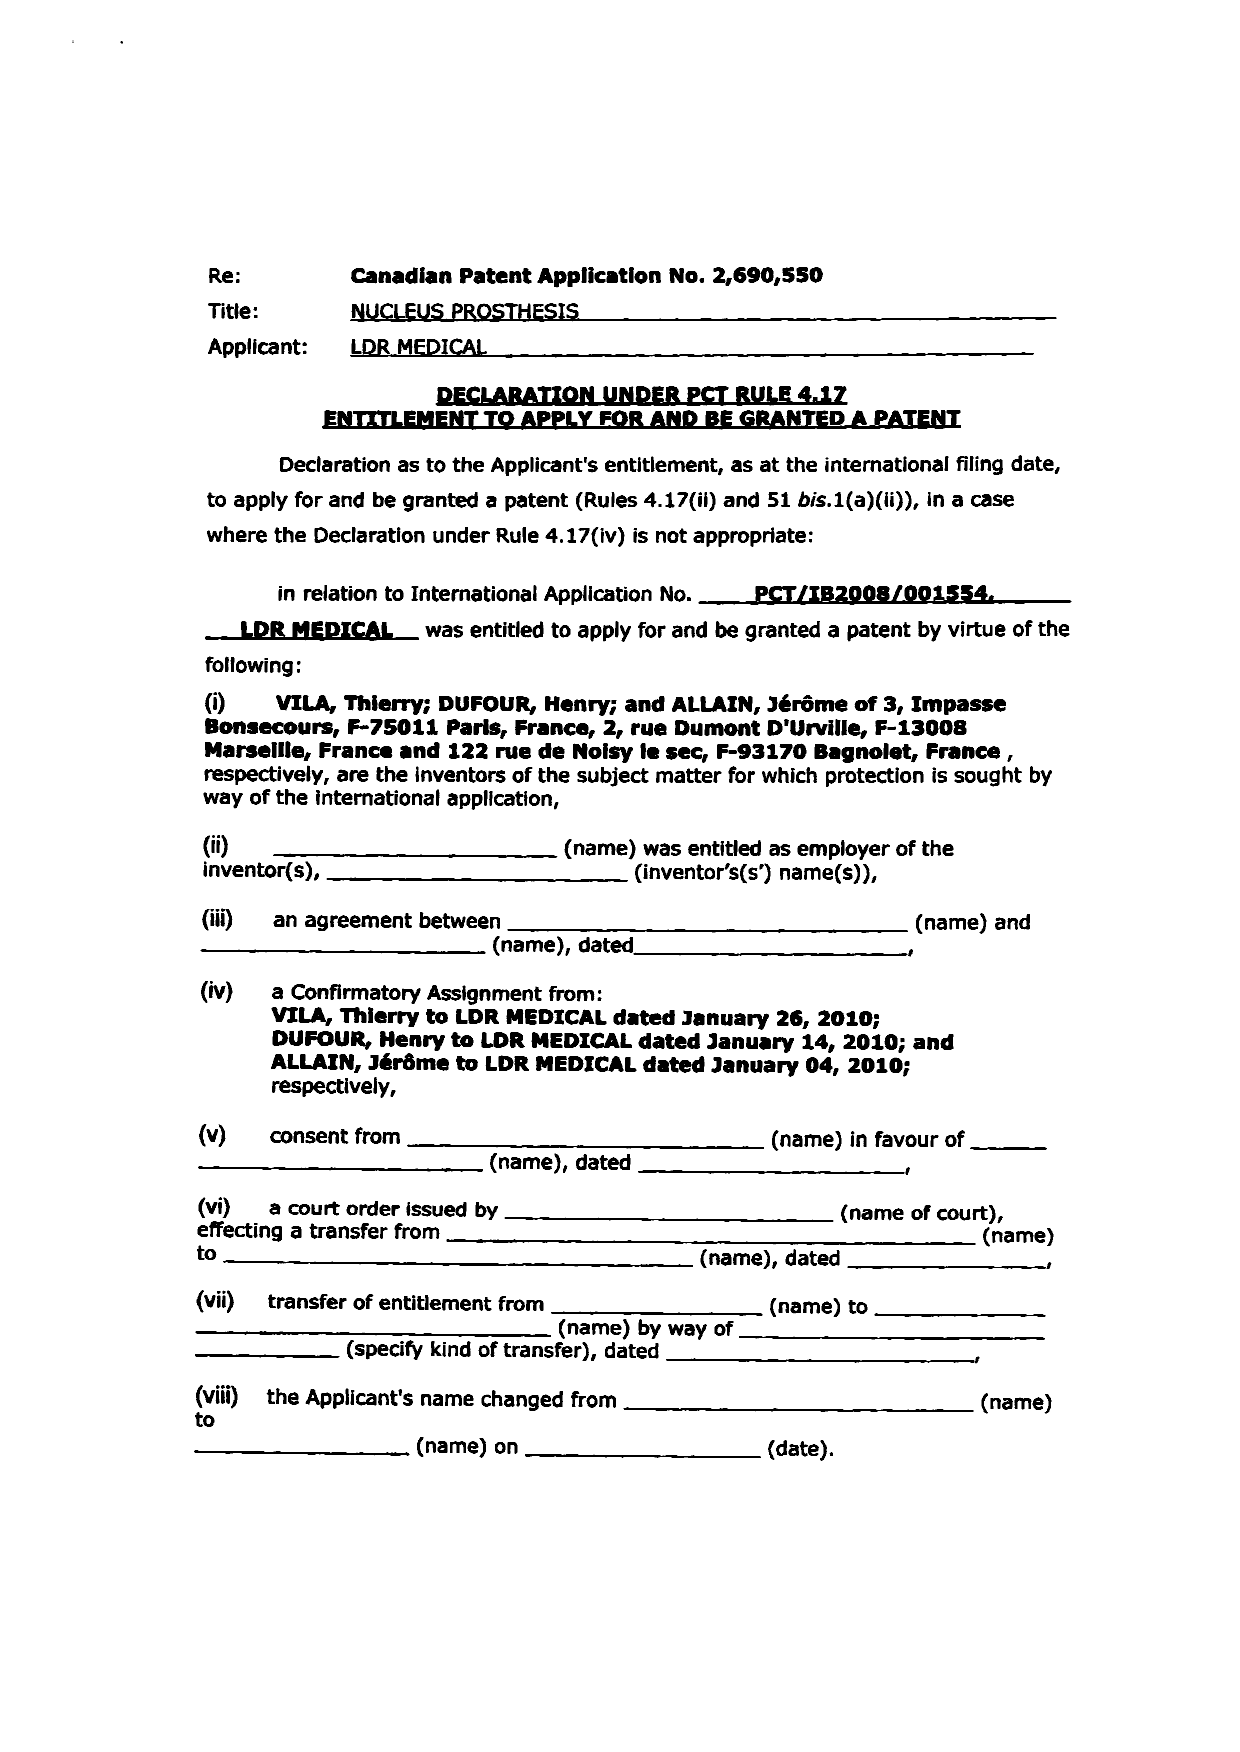 Canadian Patent Document 2690550. Correspondence 20091204. Image 2 of 2